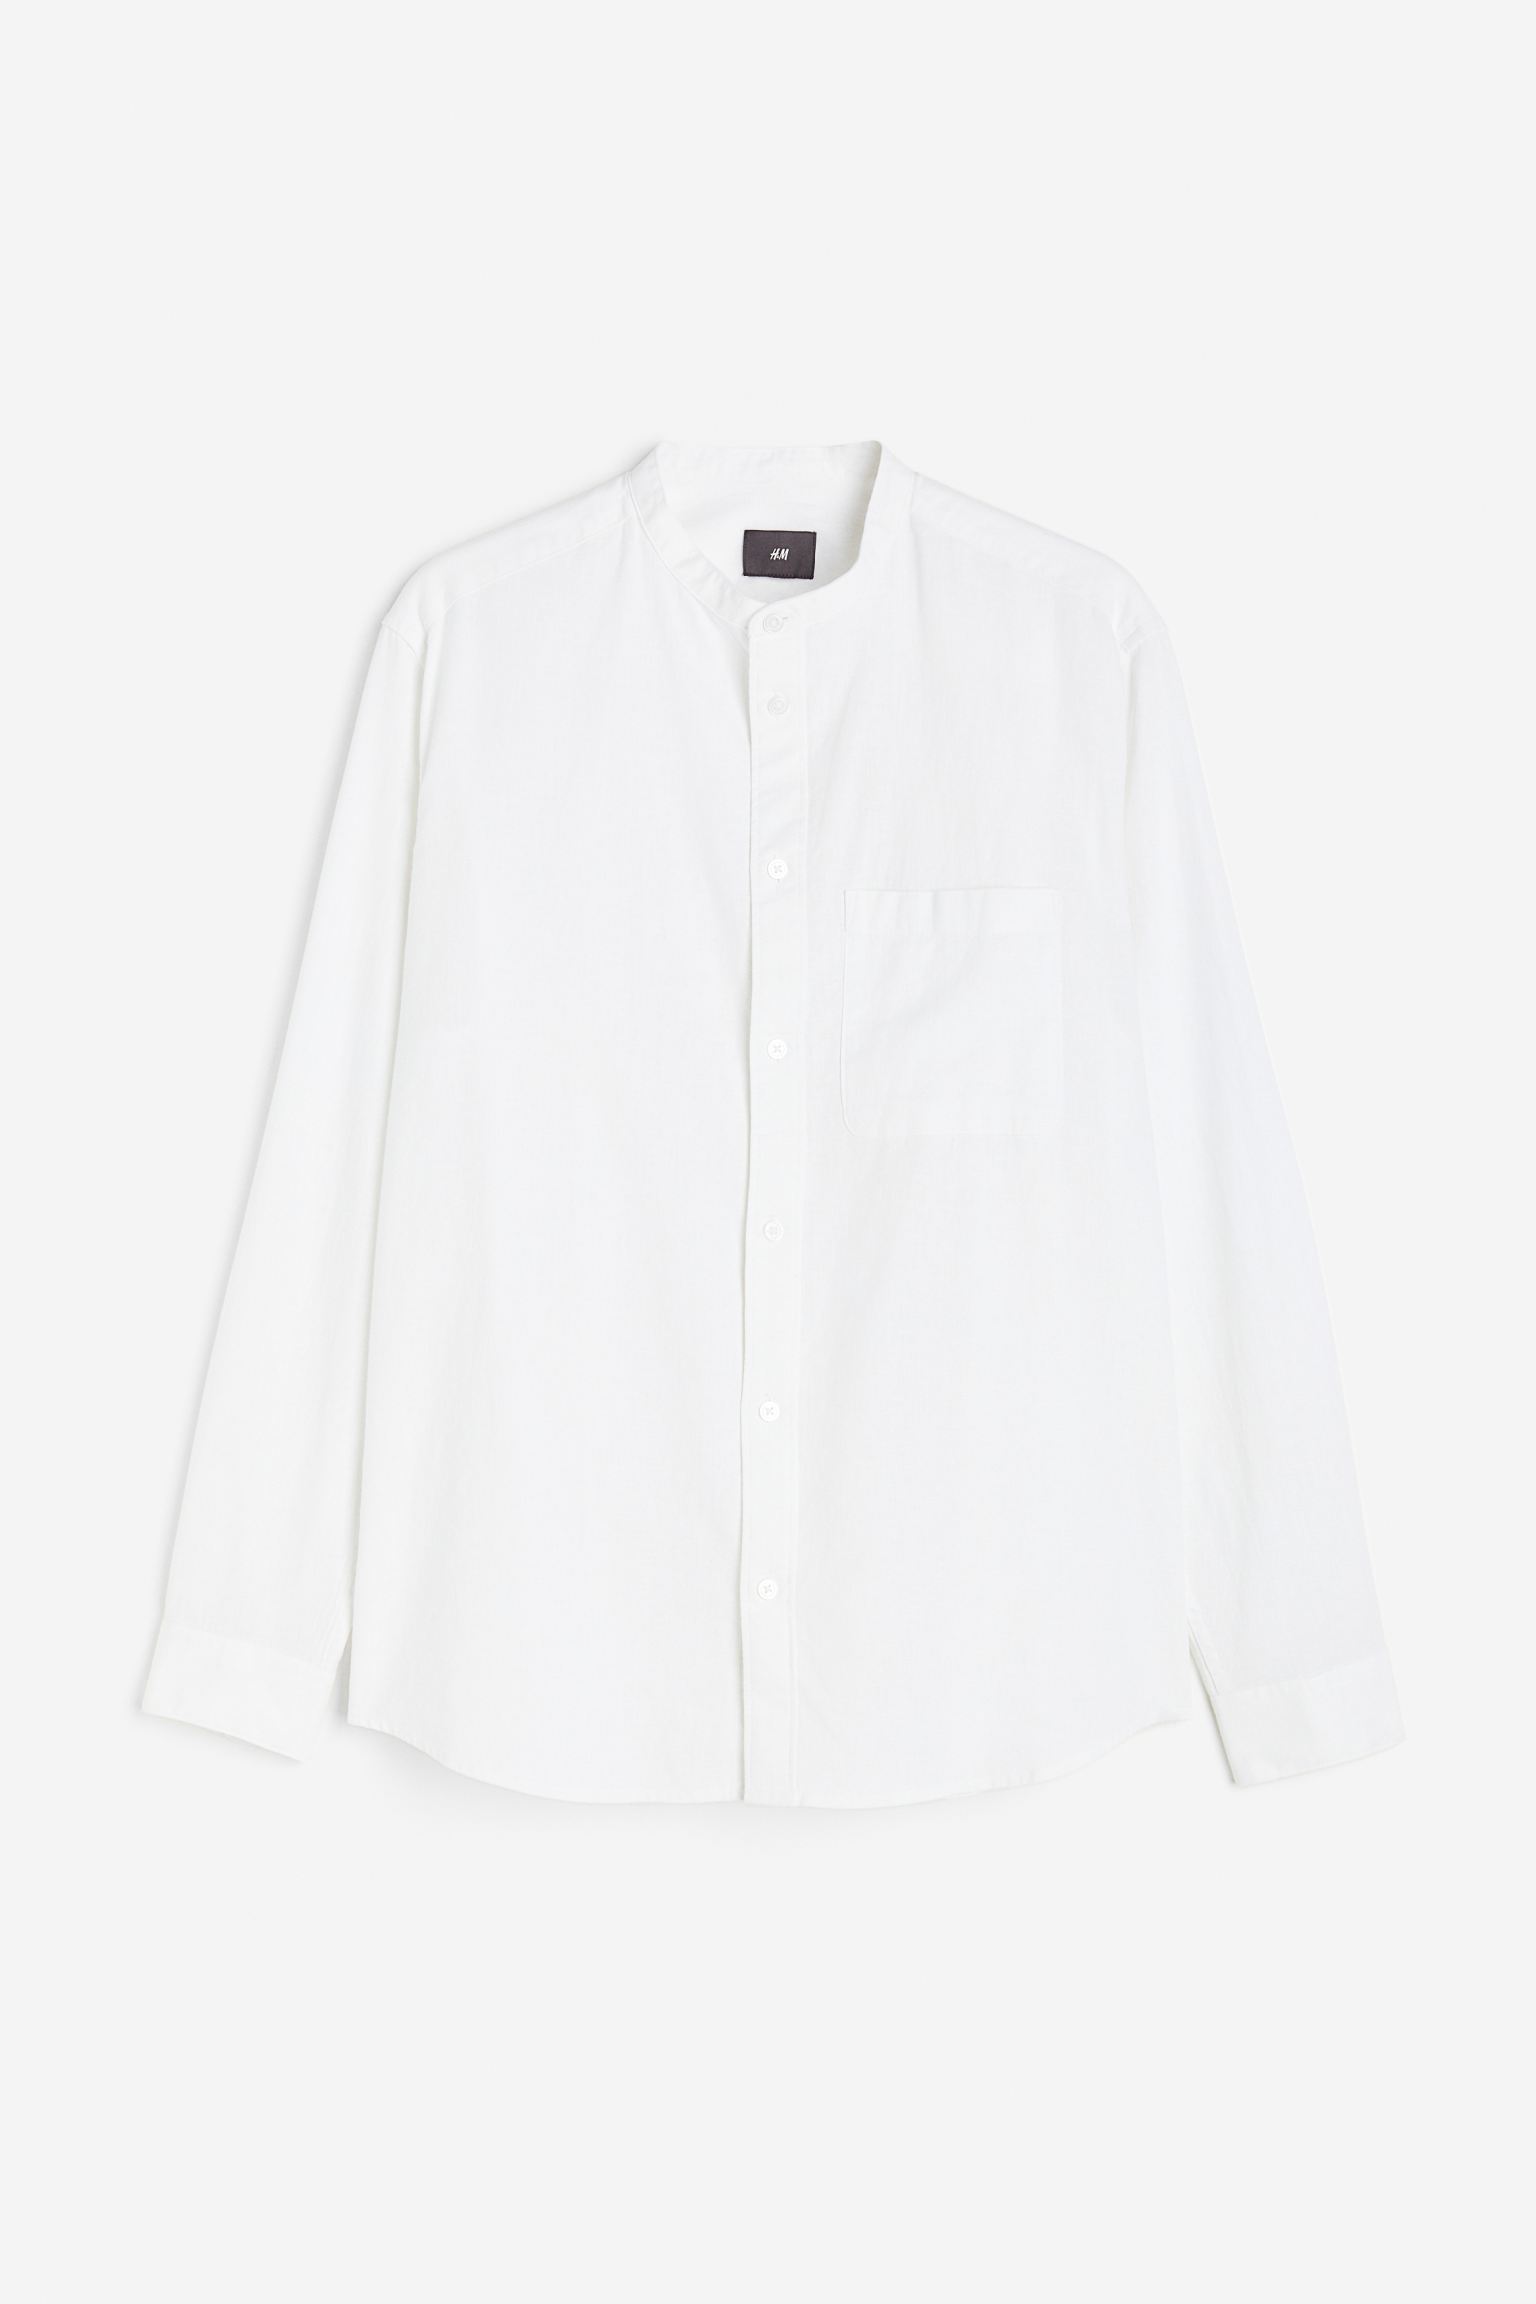 Рубашка мужская H&M 740425018 белая L (доставка из-за рубежа)